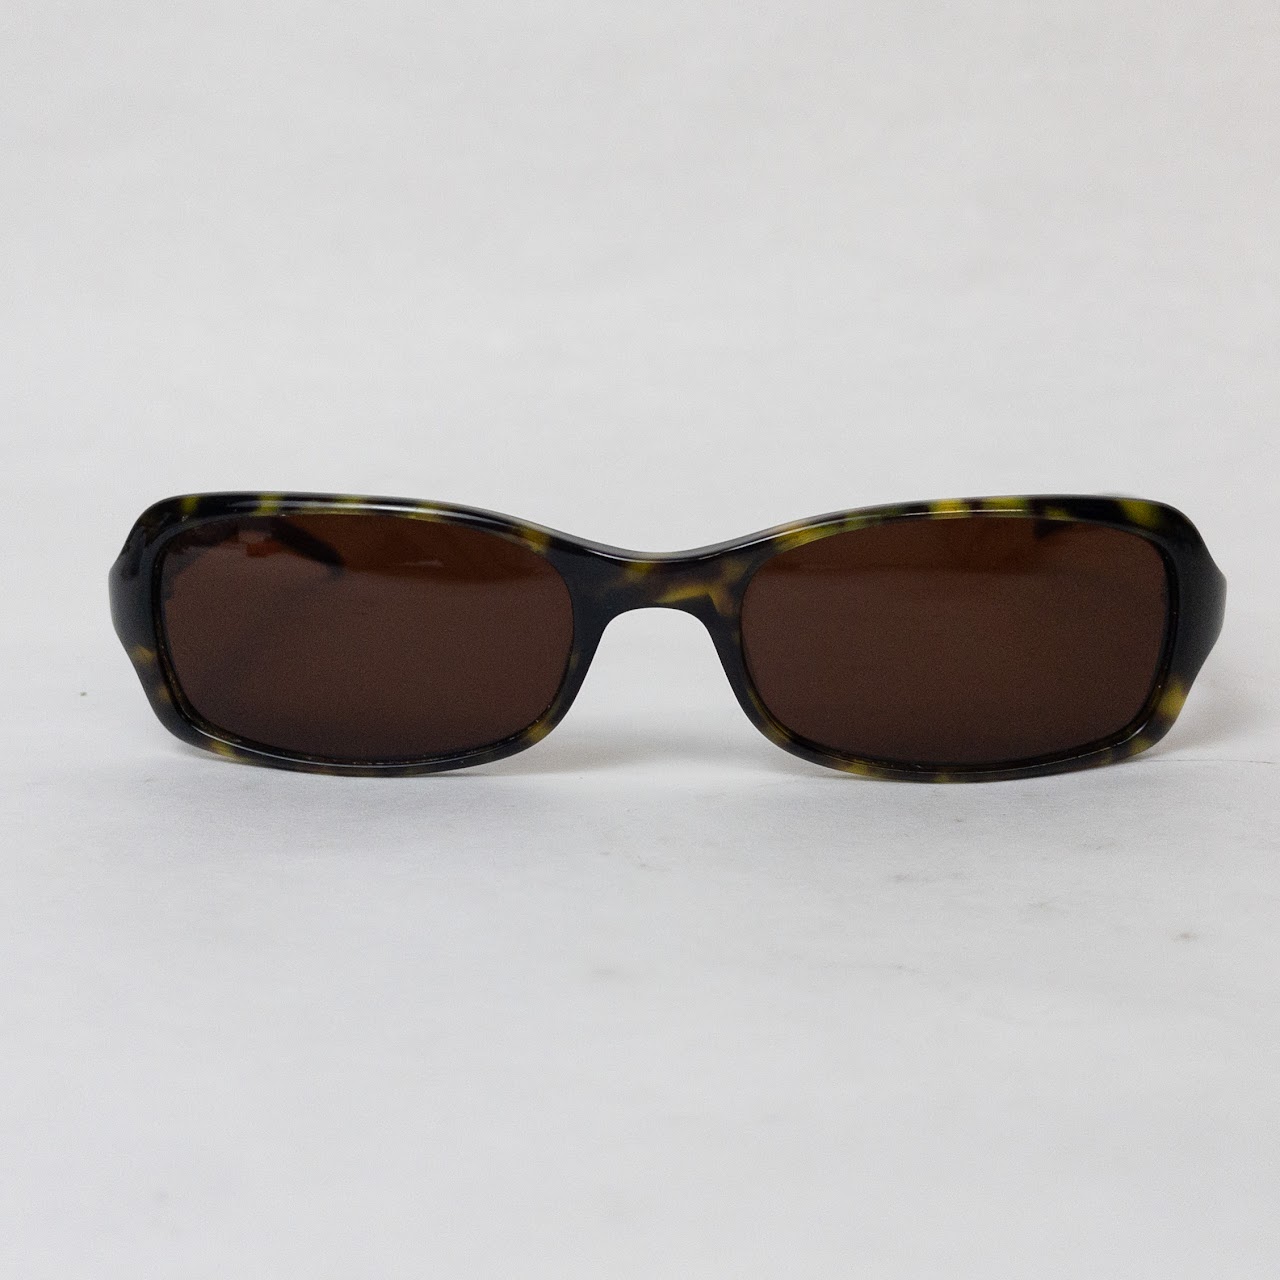 Gucci Tortiseshell Sunglasses